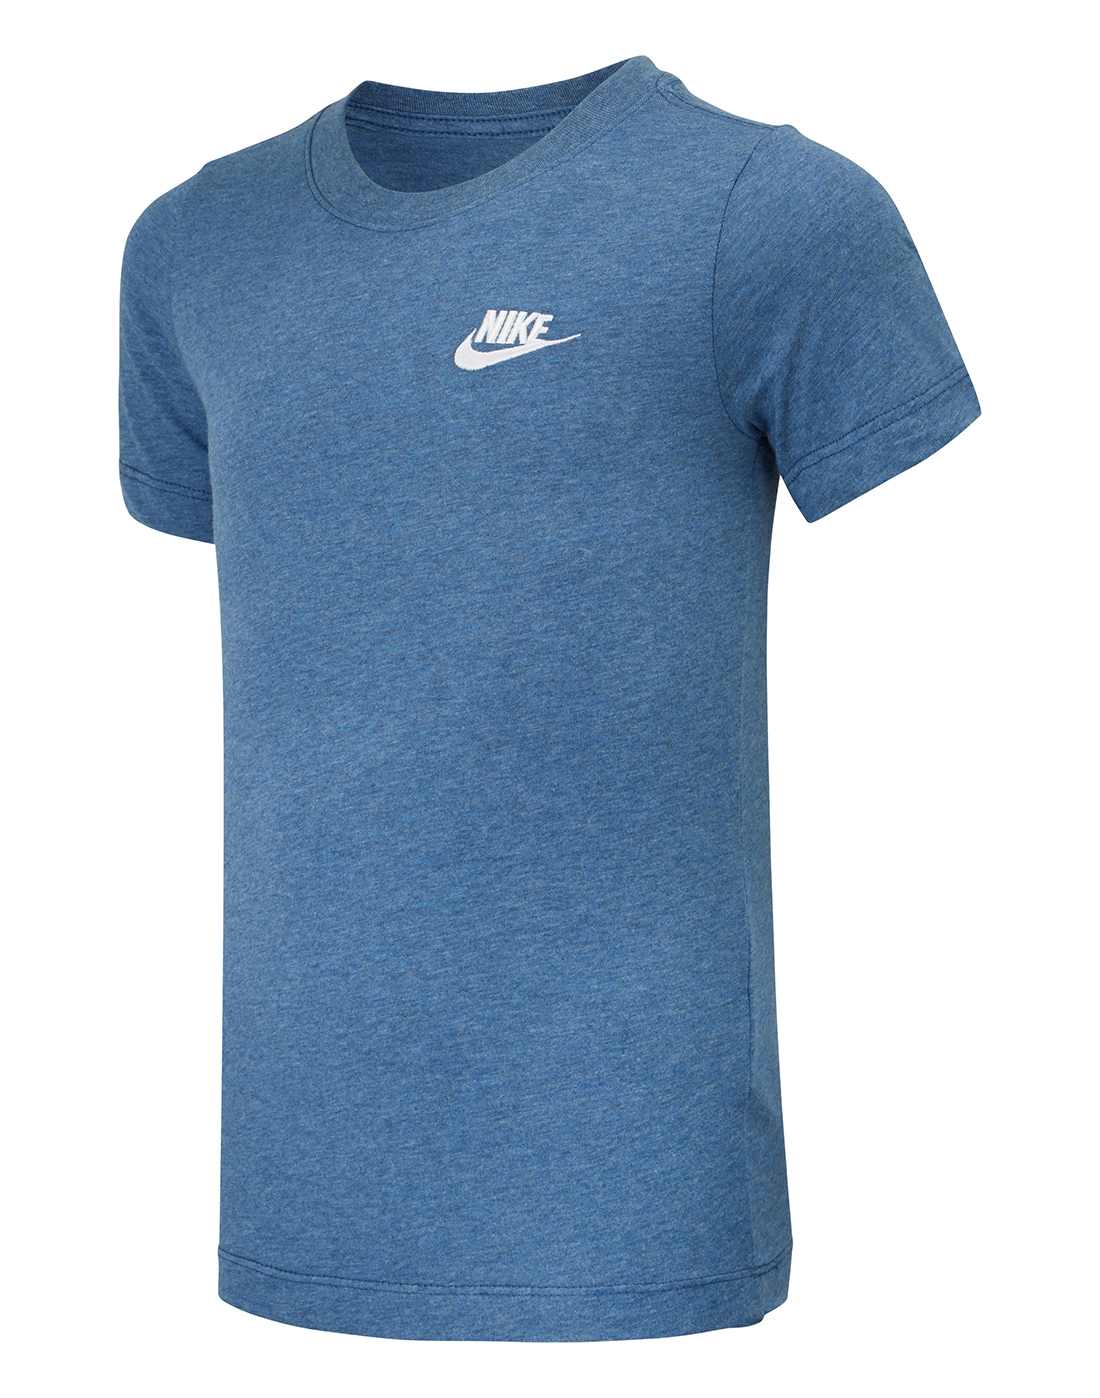 Nike Older Boys Futura T-Shirt - Navy | Life Style Sports IE